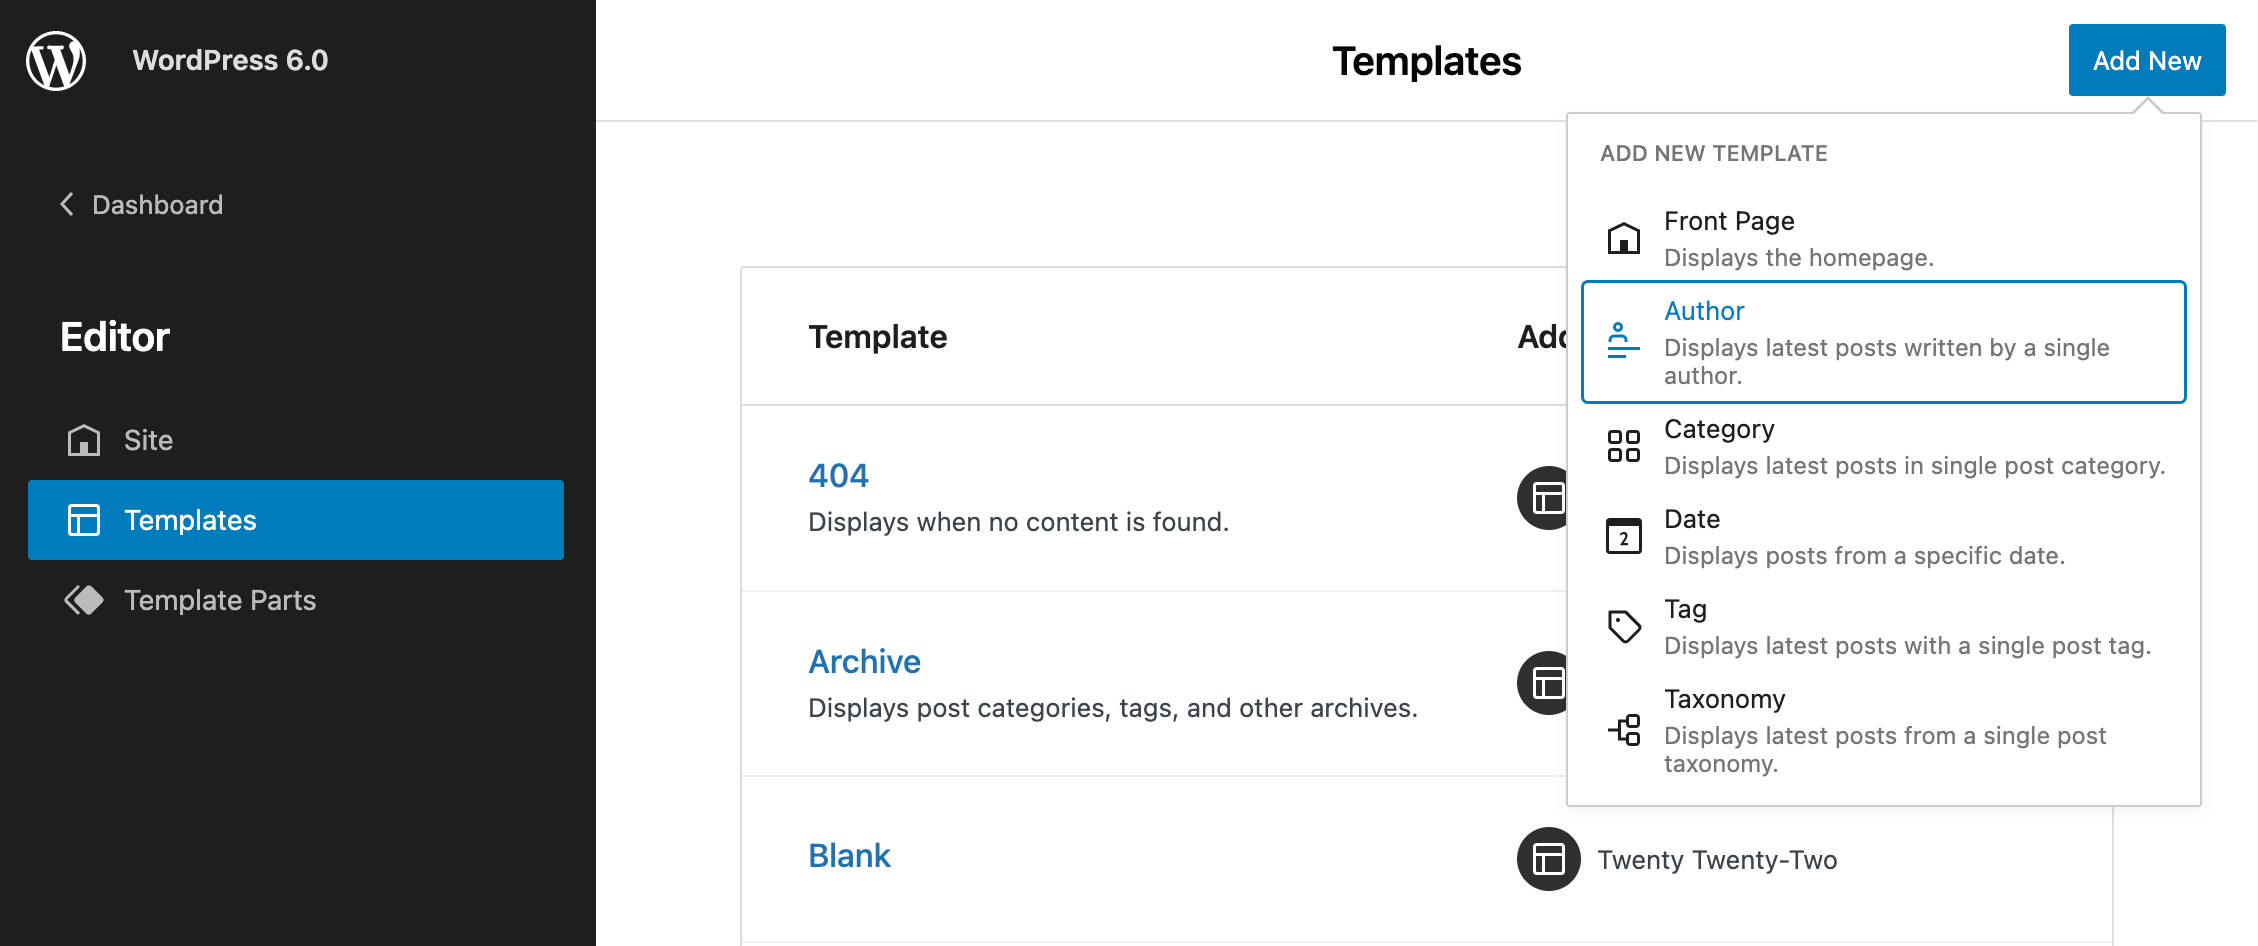 Una schermata che mostra i template in WordPress 6.0.